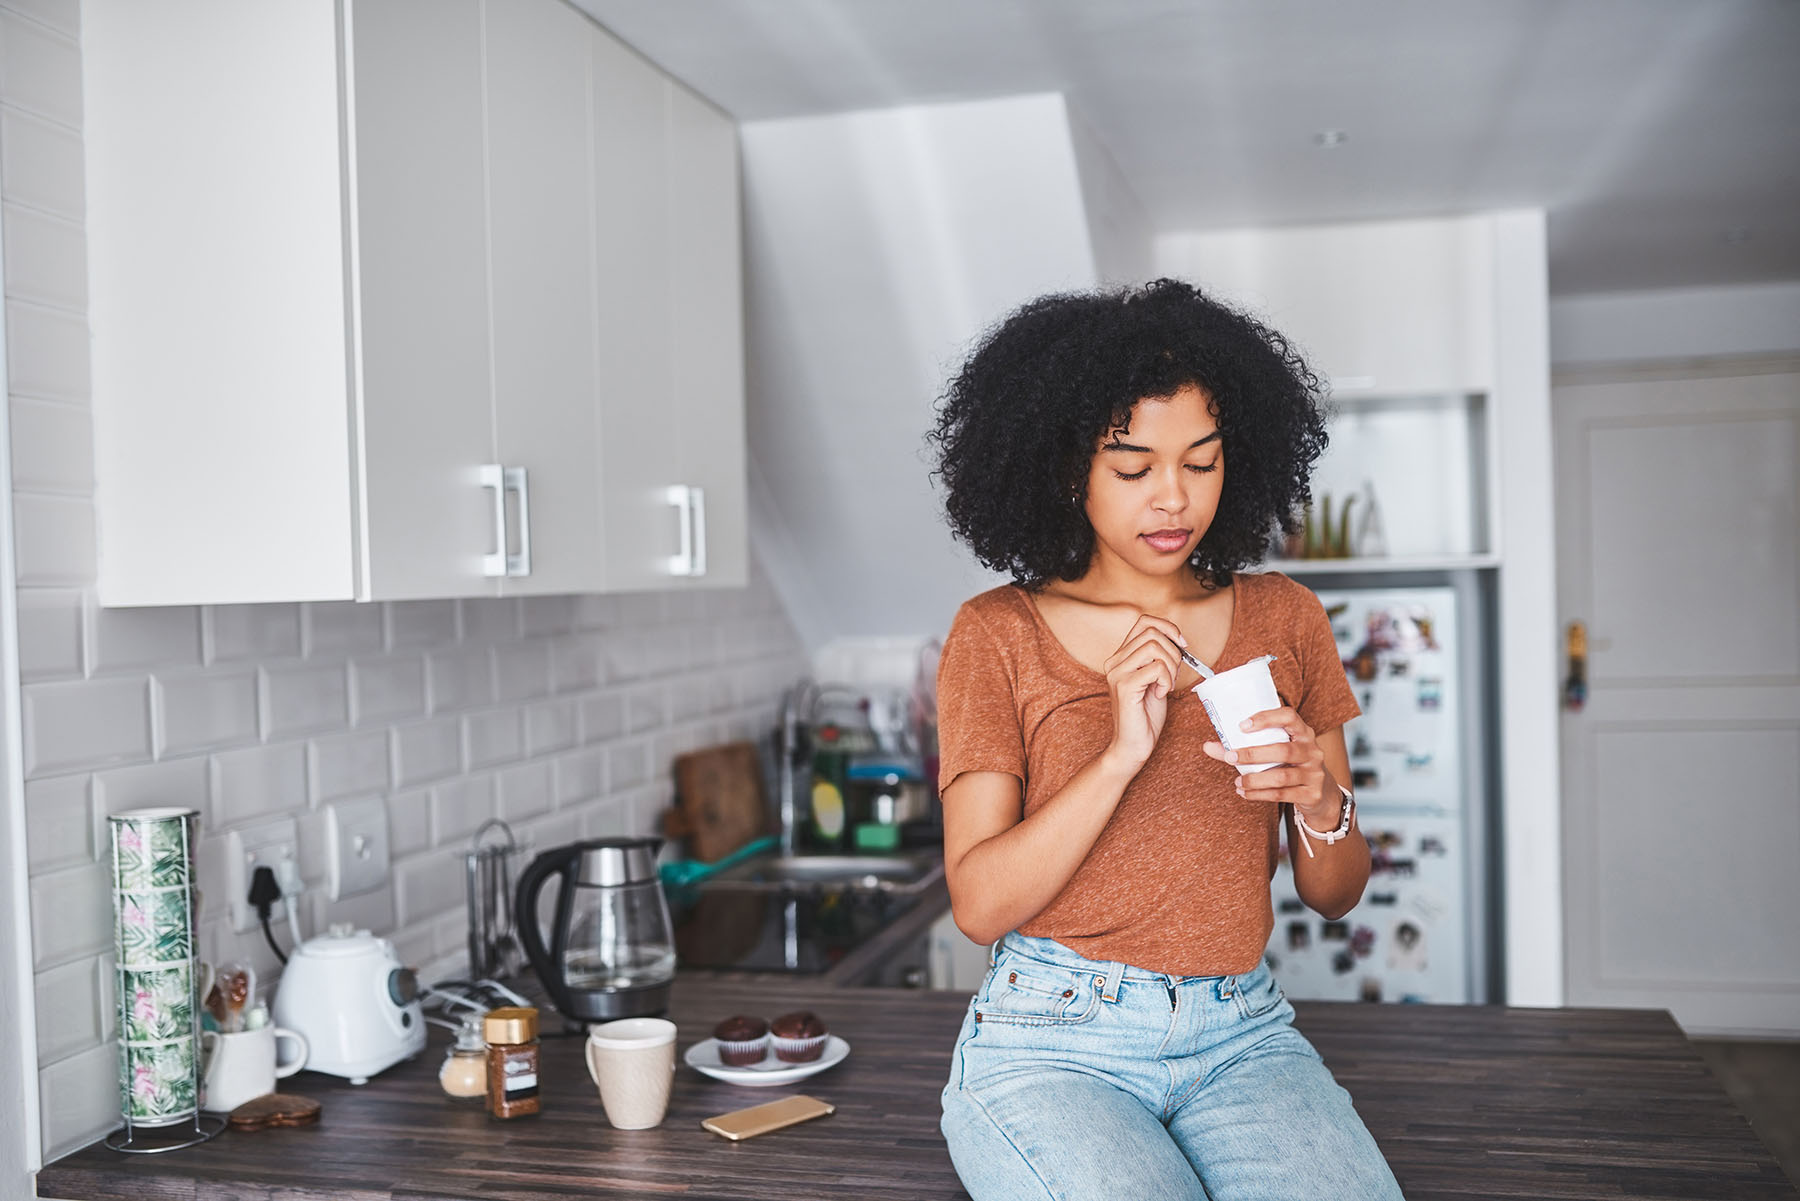 Young Black woman eats yogurt while sitting on countertop.